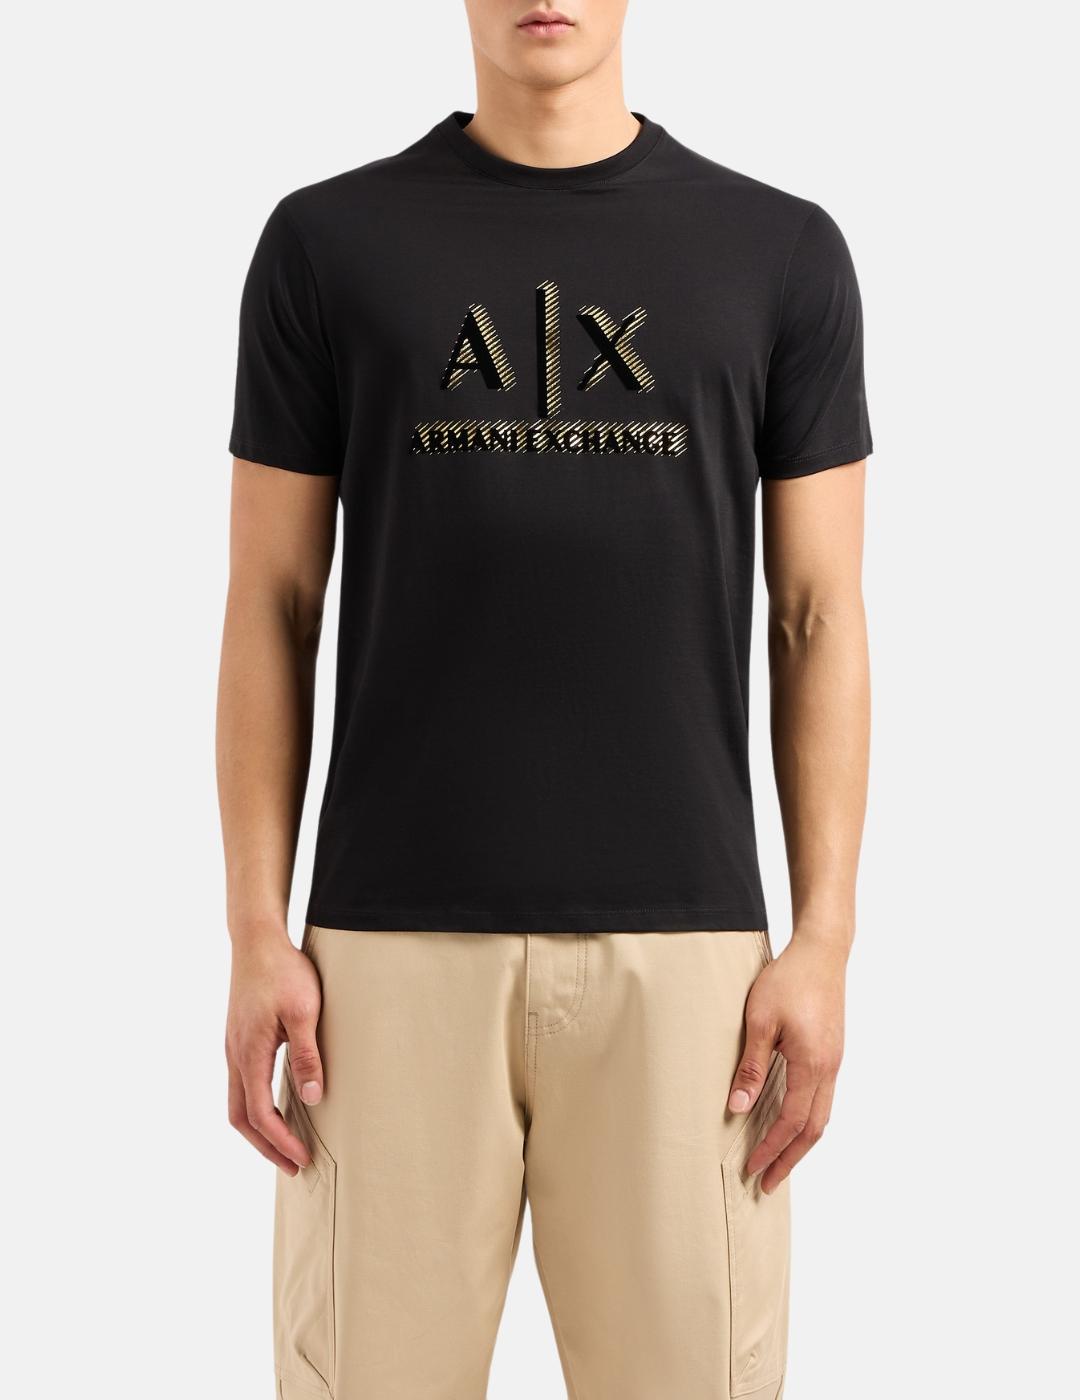 Camiseta Armani Exchance negra Logo dorado hombre